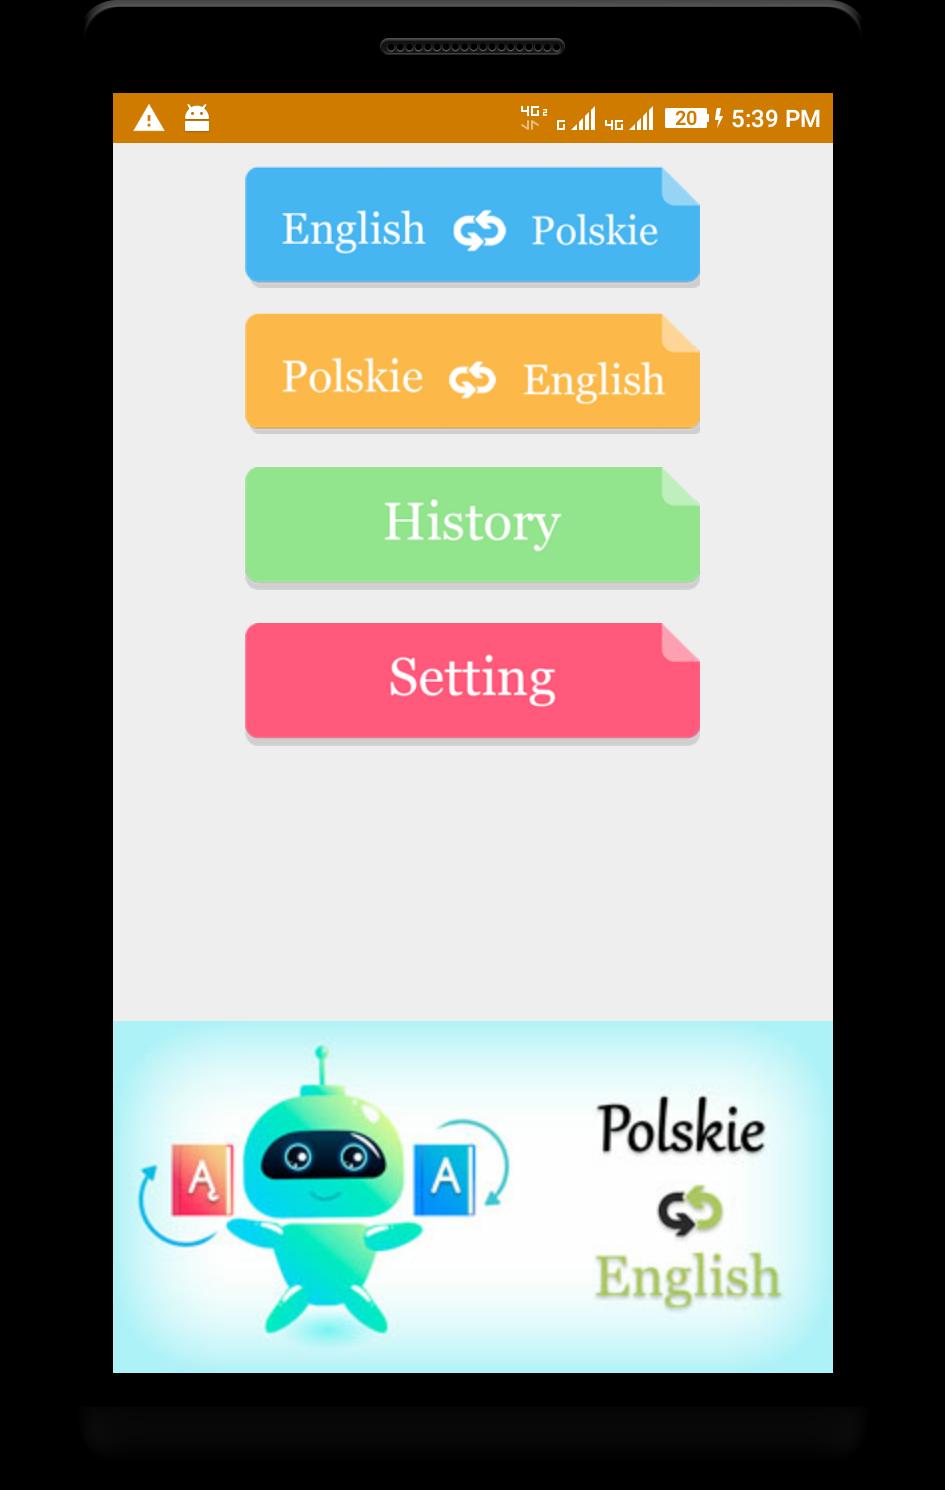 Polish - English Translator (Polski tłumacz) for Android - APK Download